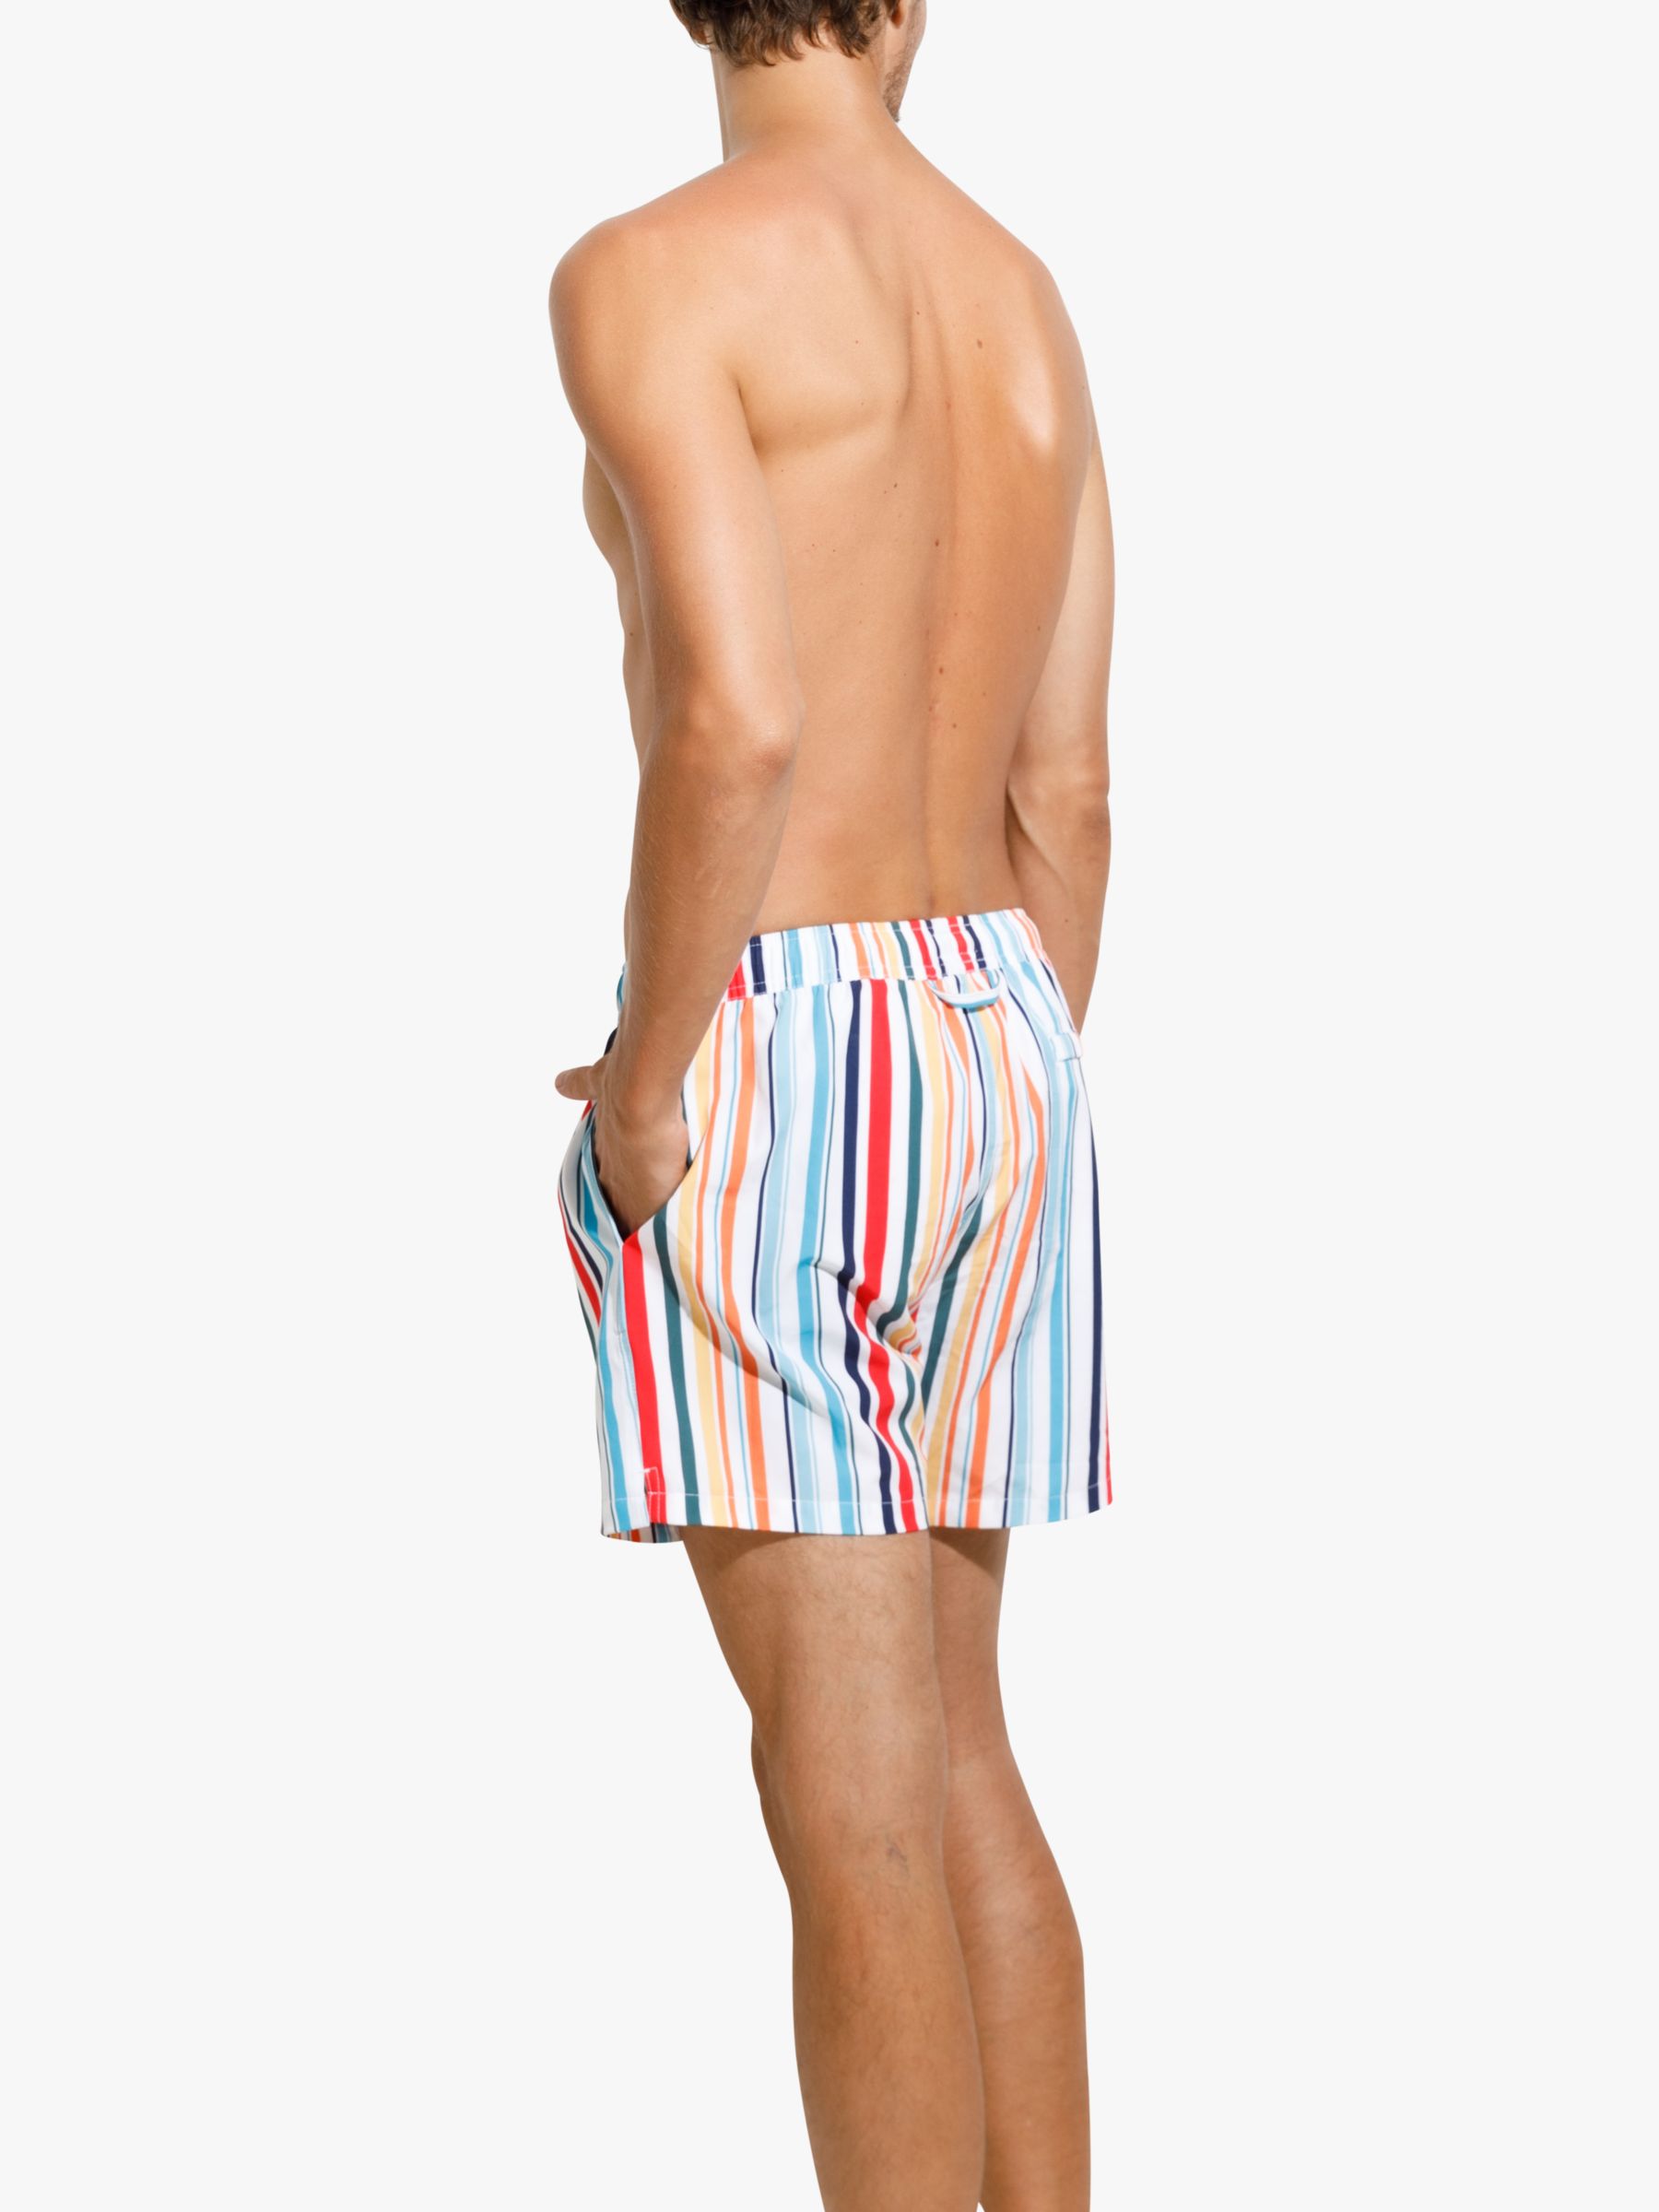 Panos Emporio Classic Beach Stripe Swim Shorts, Multi, S